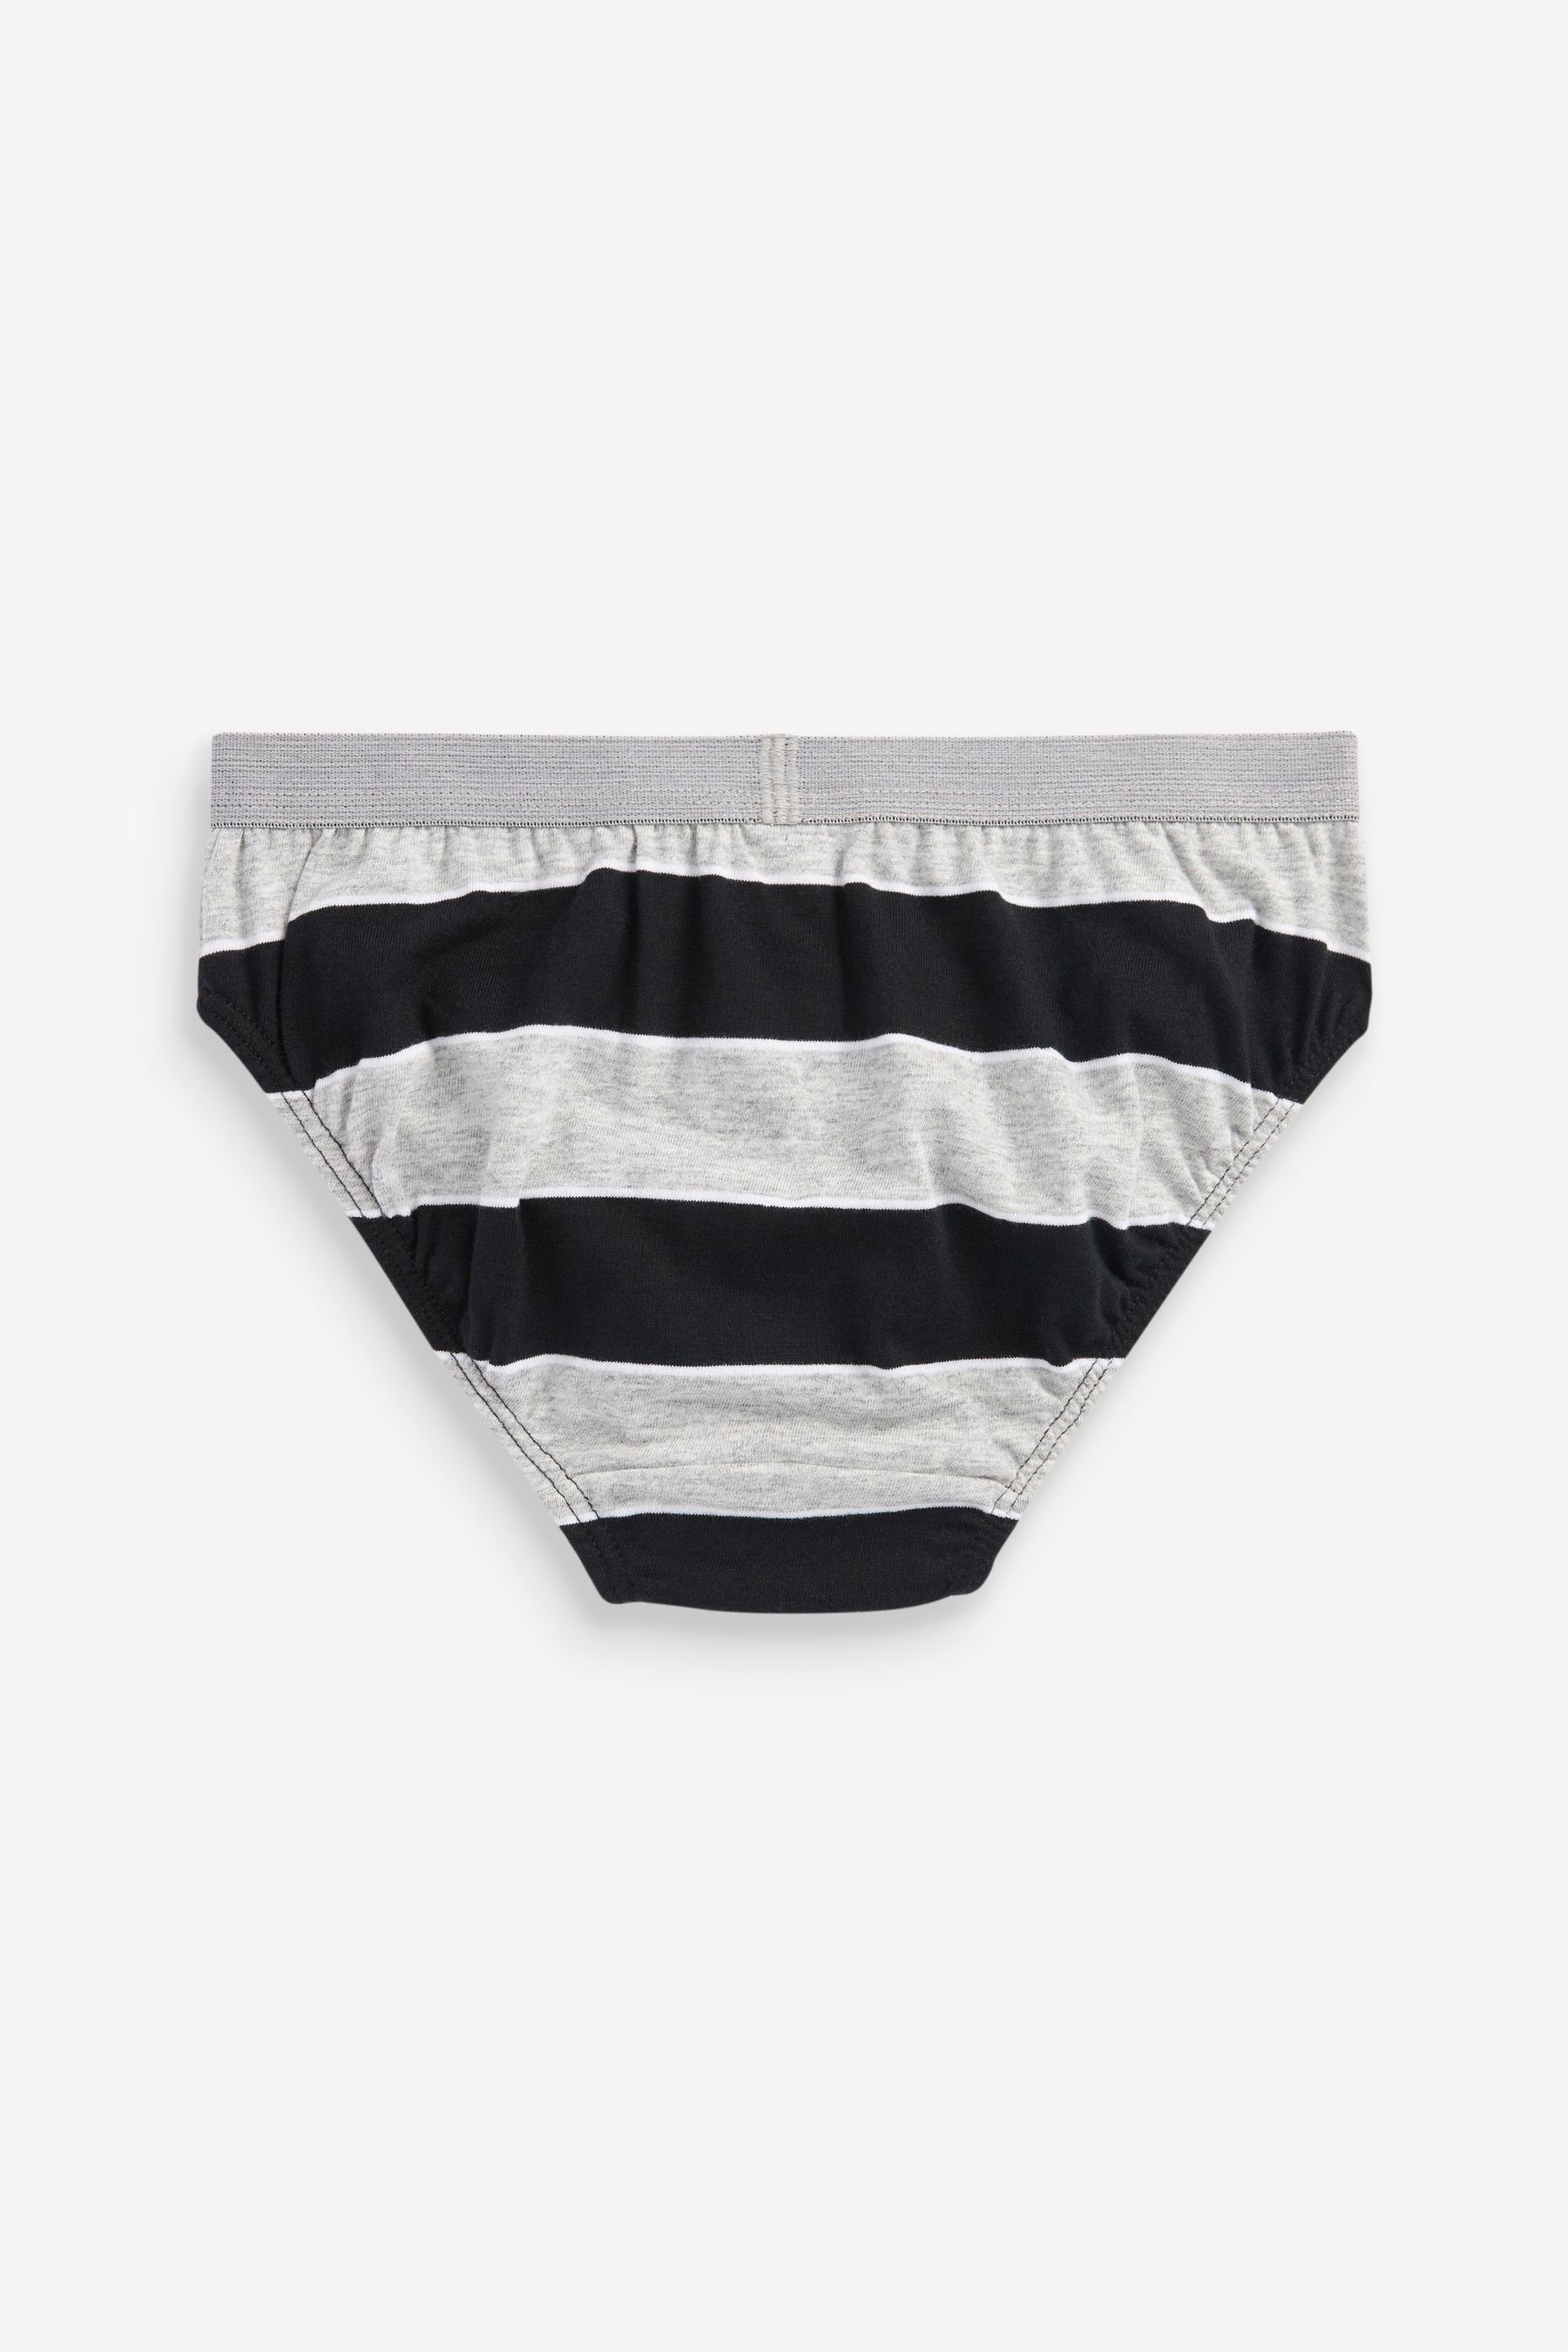 Stripe im Black/White/Grey Unterhosen Slip (5-St) 5er-Pack Next